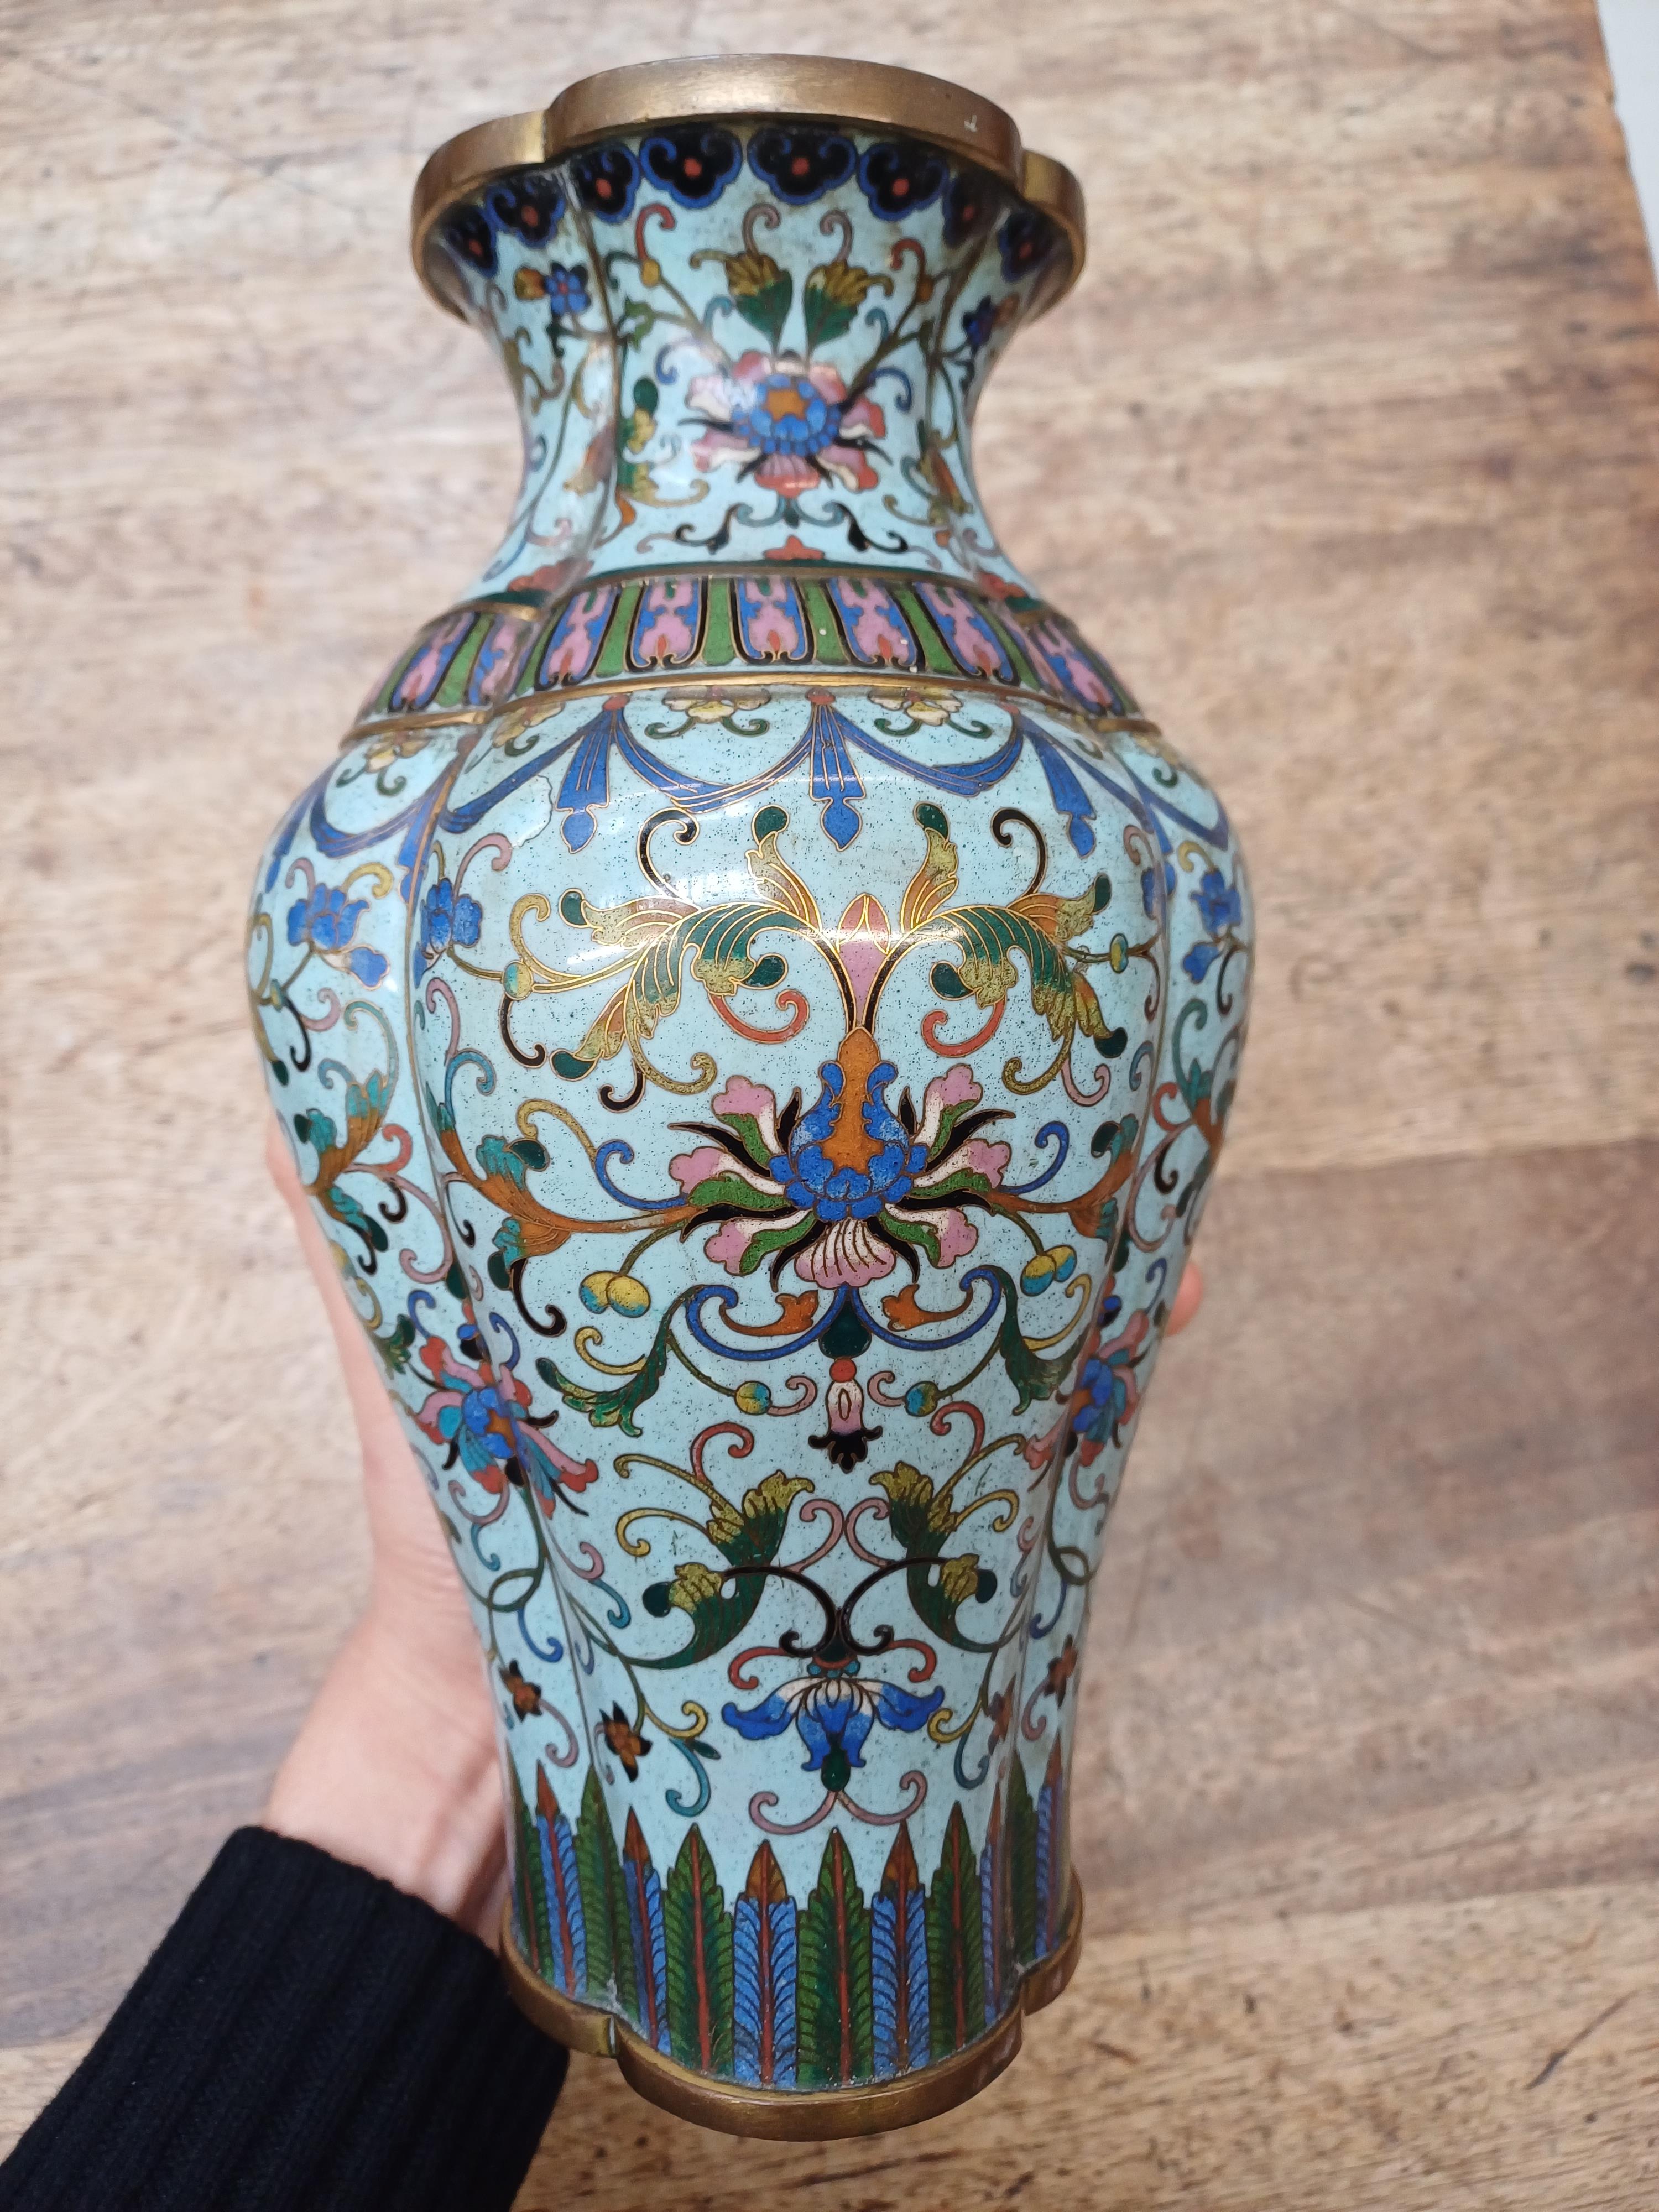 A PAIR OF CHINESE CLOISONNÉ ENAMEL VASES 清十八世紀 銅胎掐絲琺瑯番蓮紋瓶一對 - Image 9 of 17